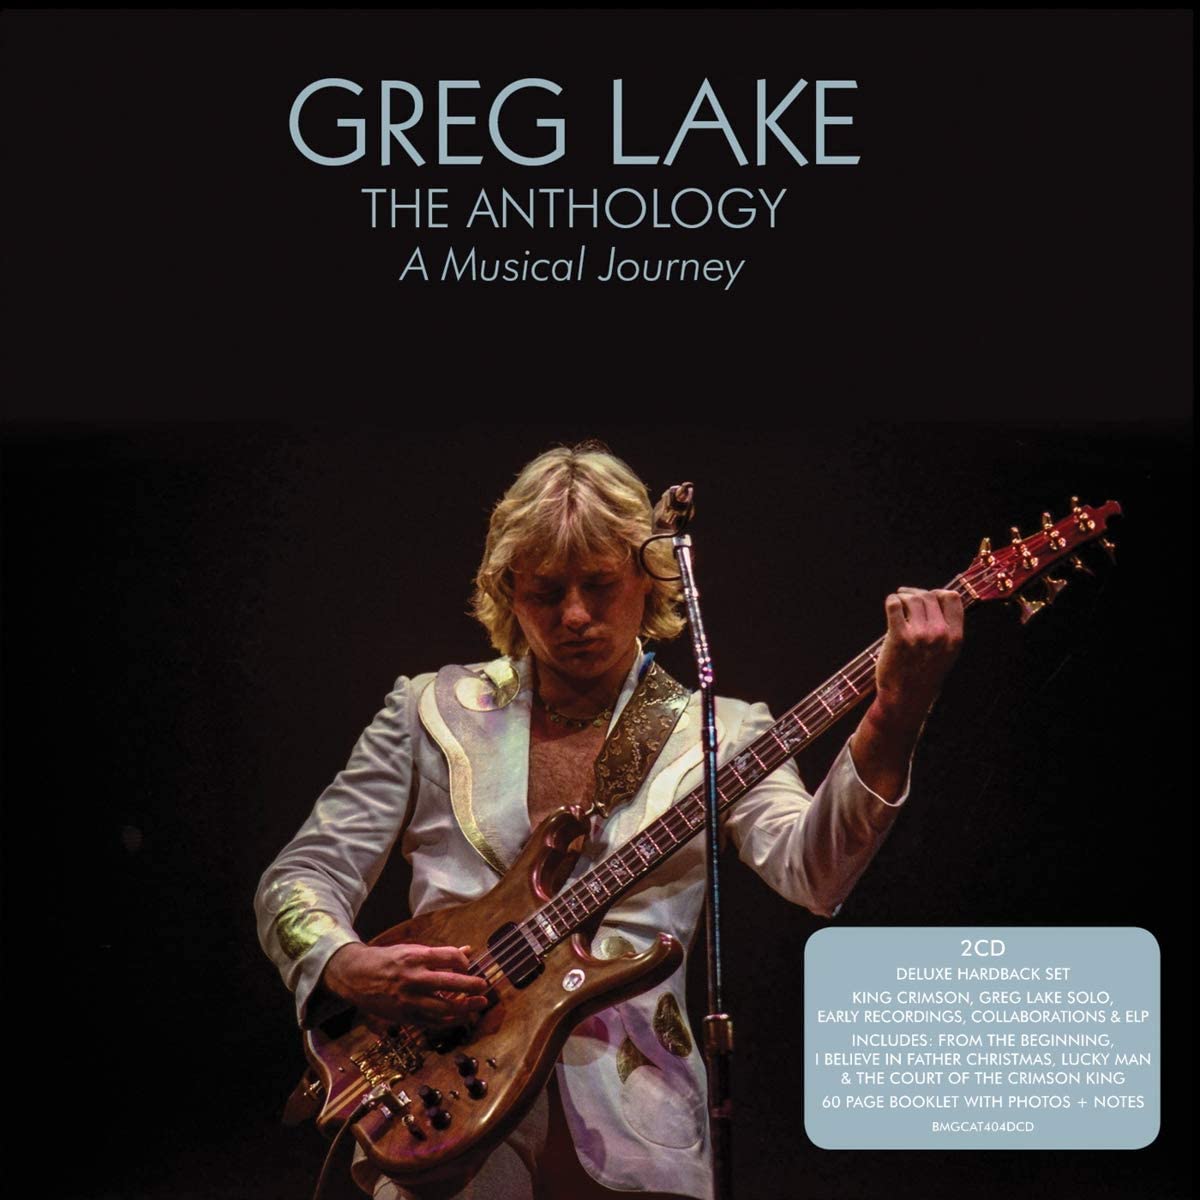 Greg Lake - The Anthology: A Musical Journey (CD) (BMG)